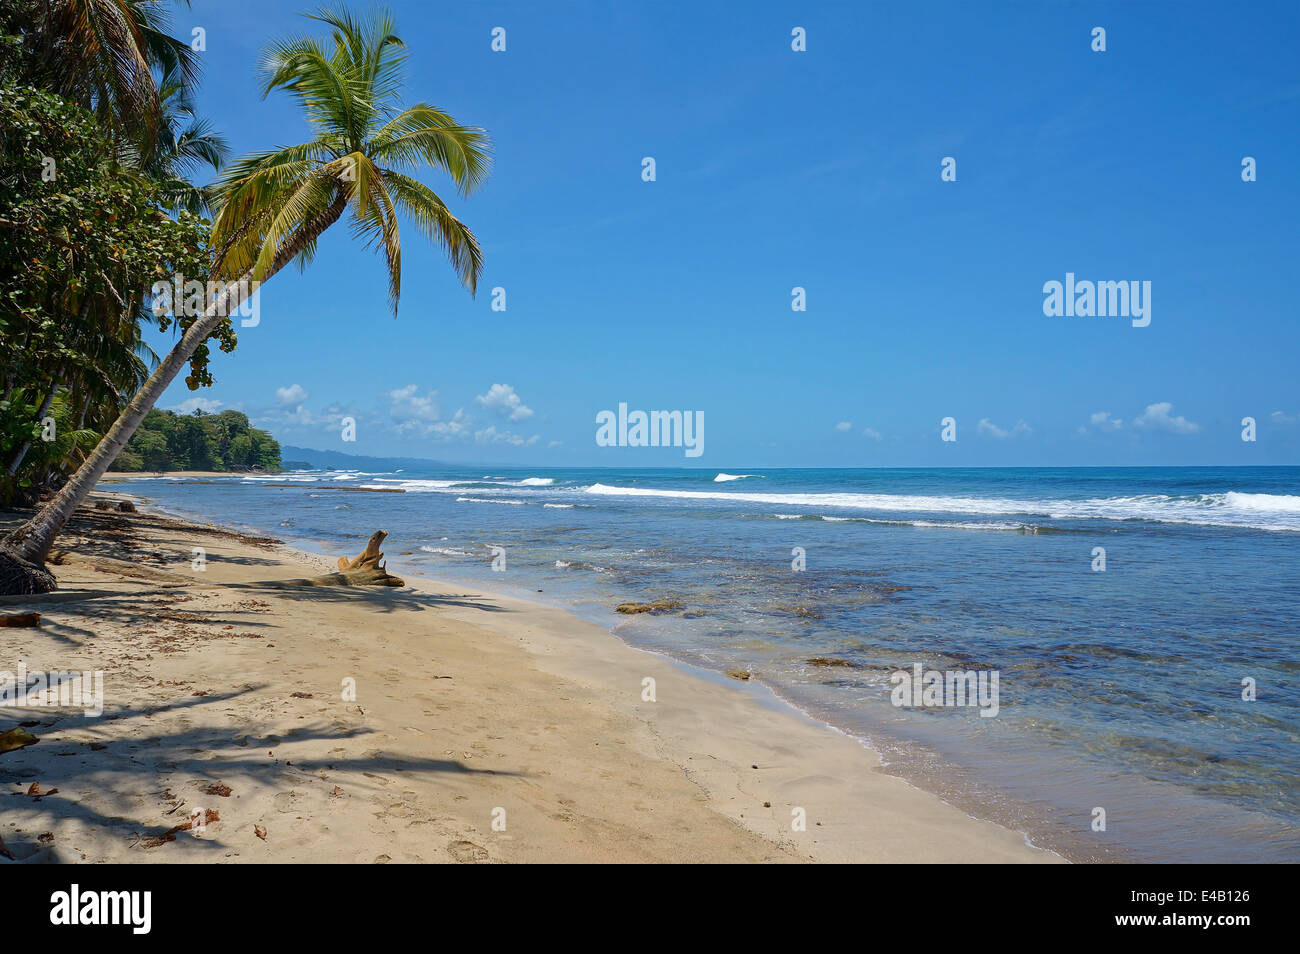 Incontaminata spiaggia dei Caraibi in Costa Rica, Playa Chiquita, Puerto Viejo de Talamanca Foto Stock